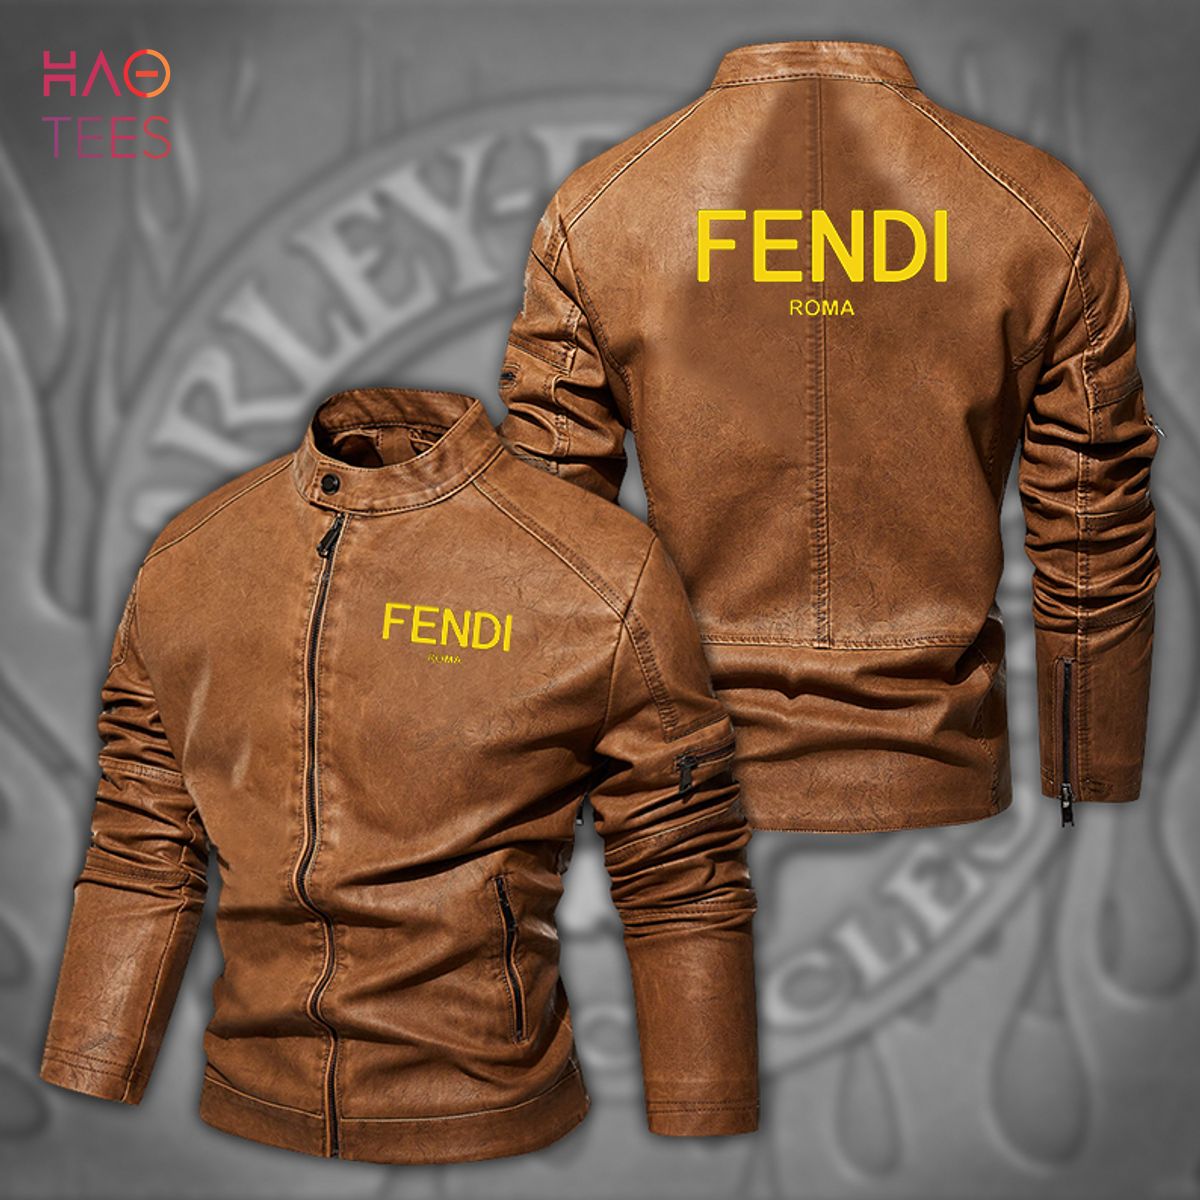 Fendi Men’s Limited Edition New Leather Jacket